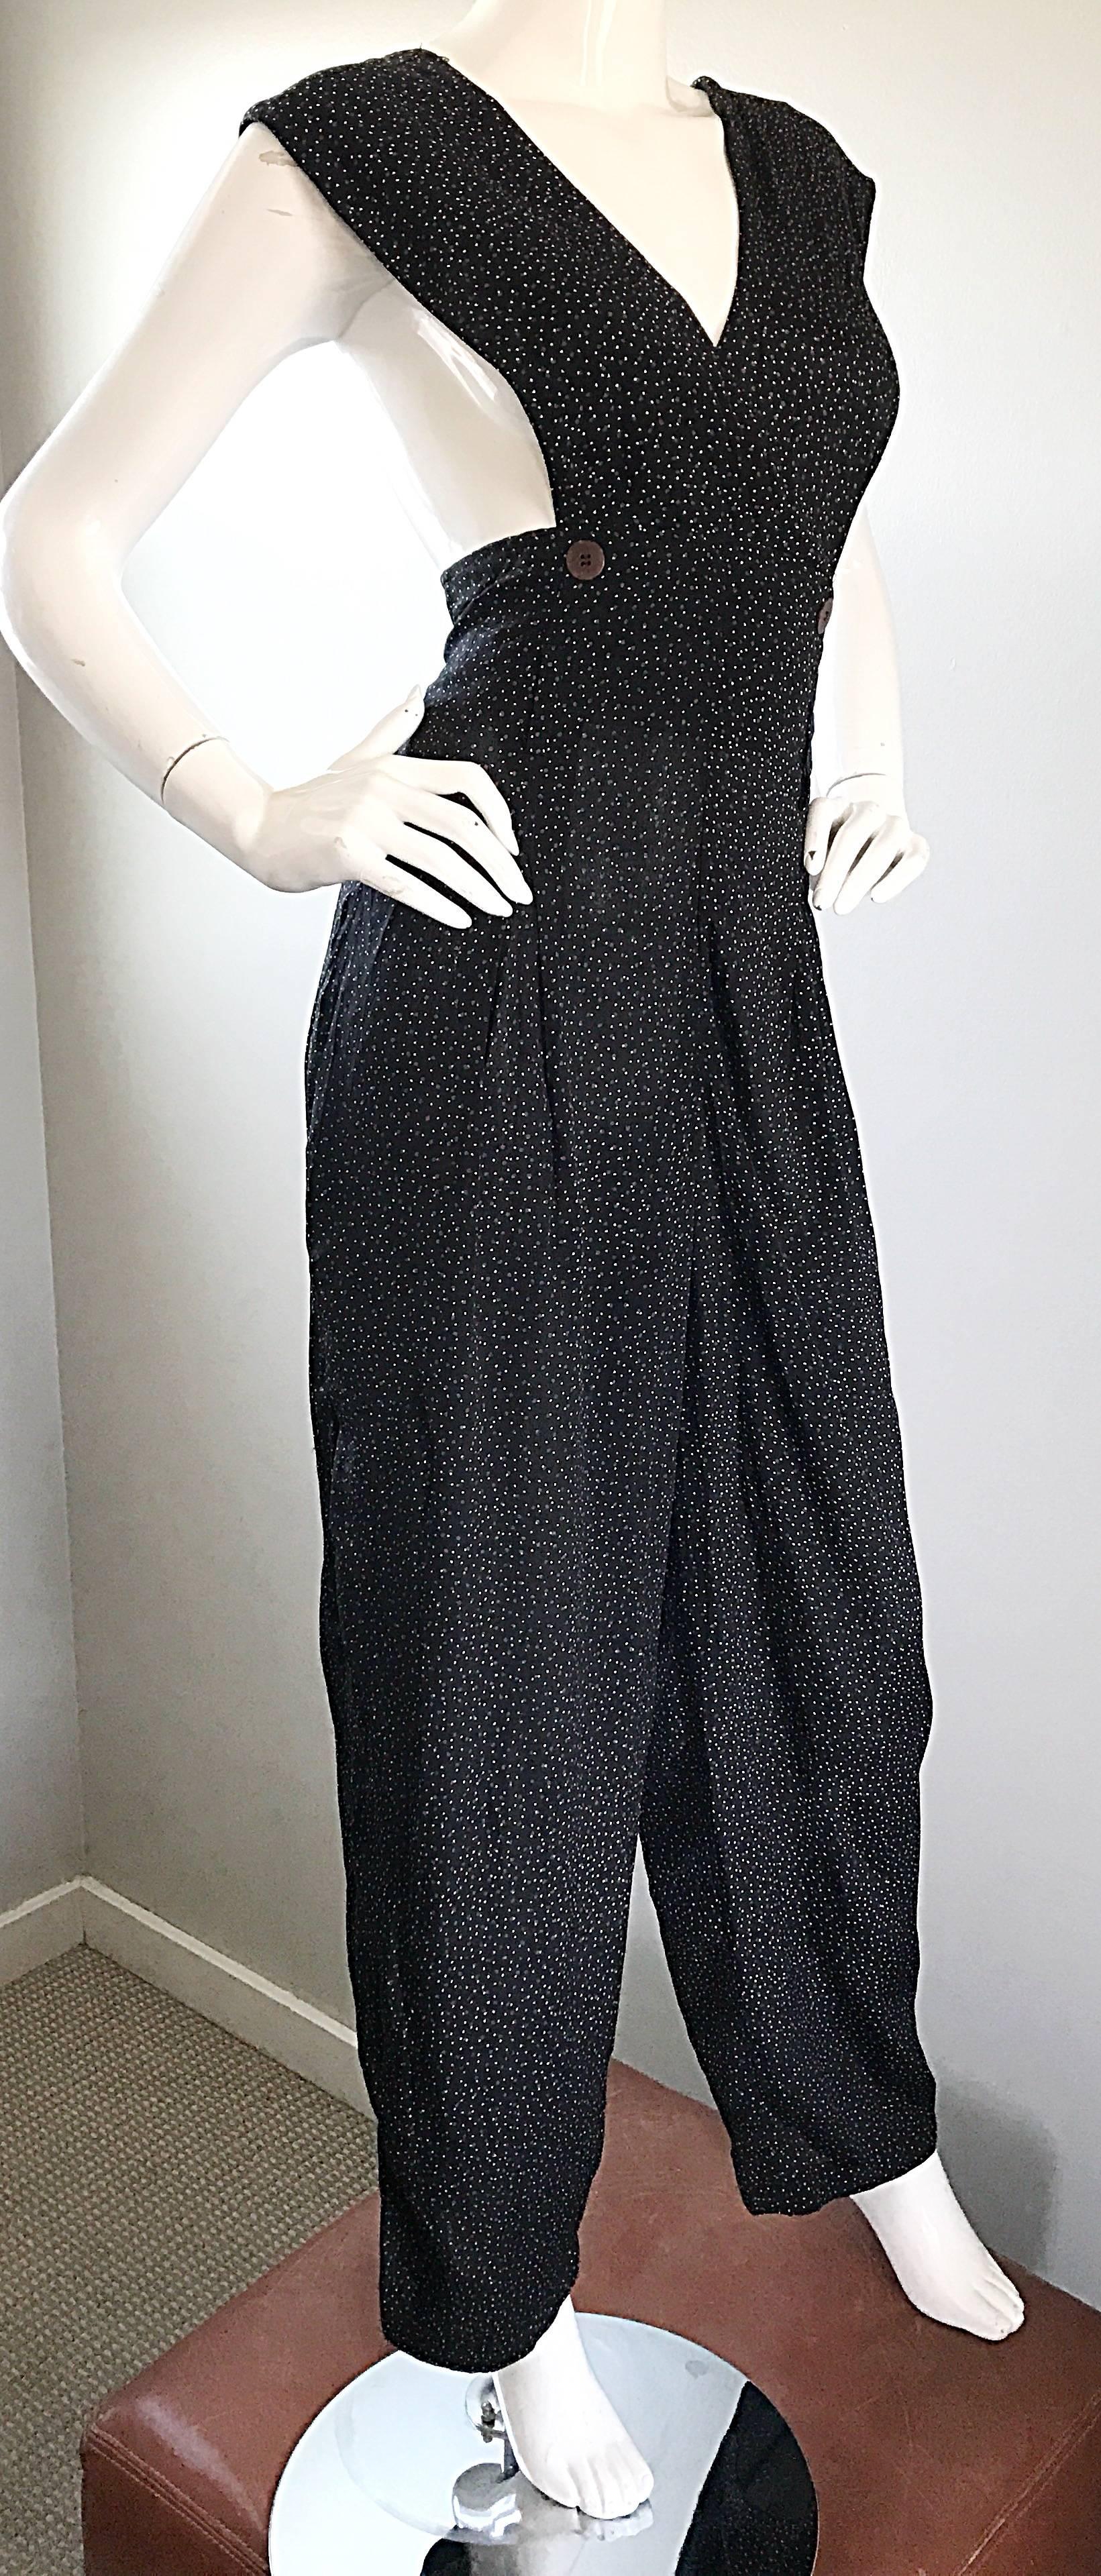 Avant Garde Vintage Shelli Segal 1990s Black + Brown + White Polka Dot Jumpsuit For Sale 1